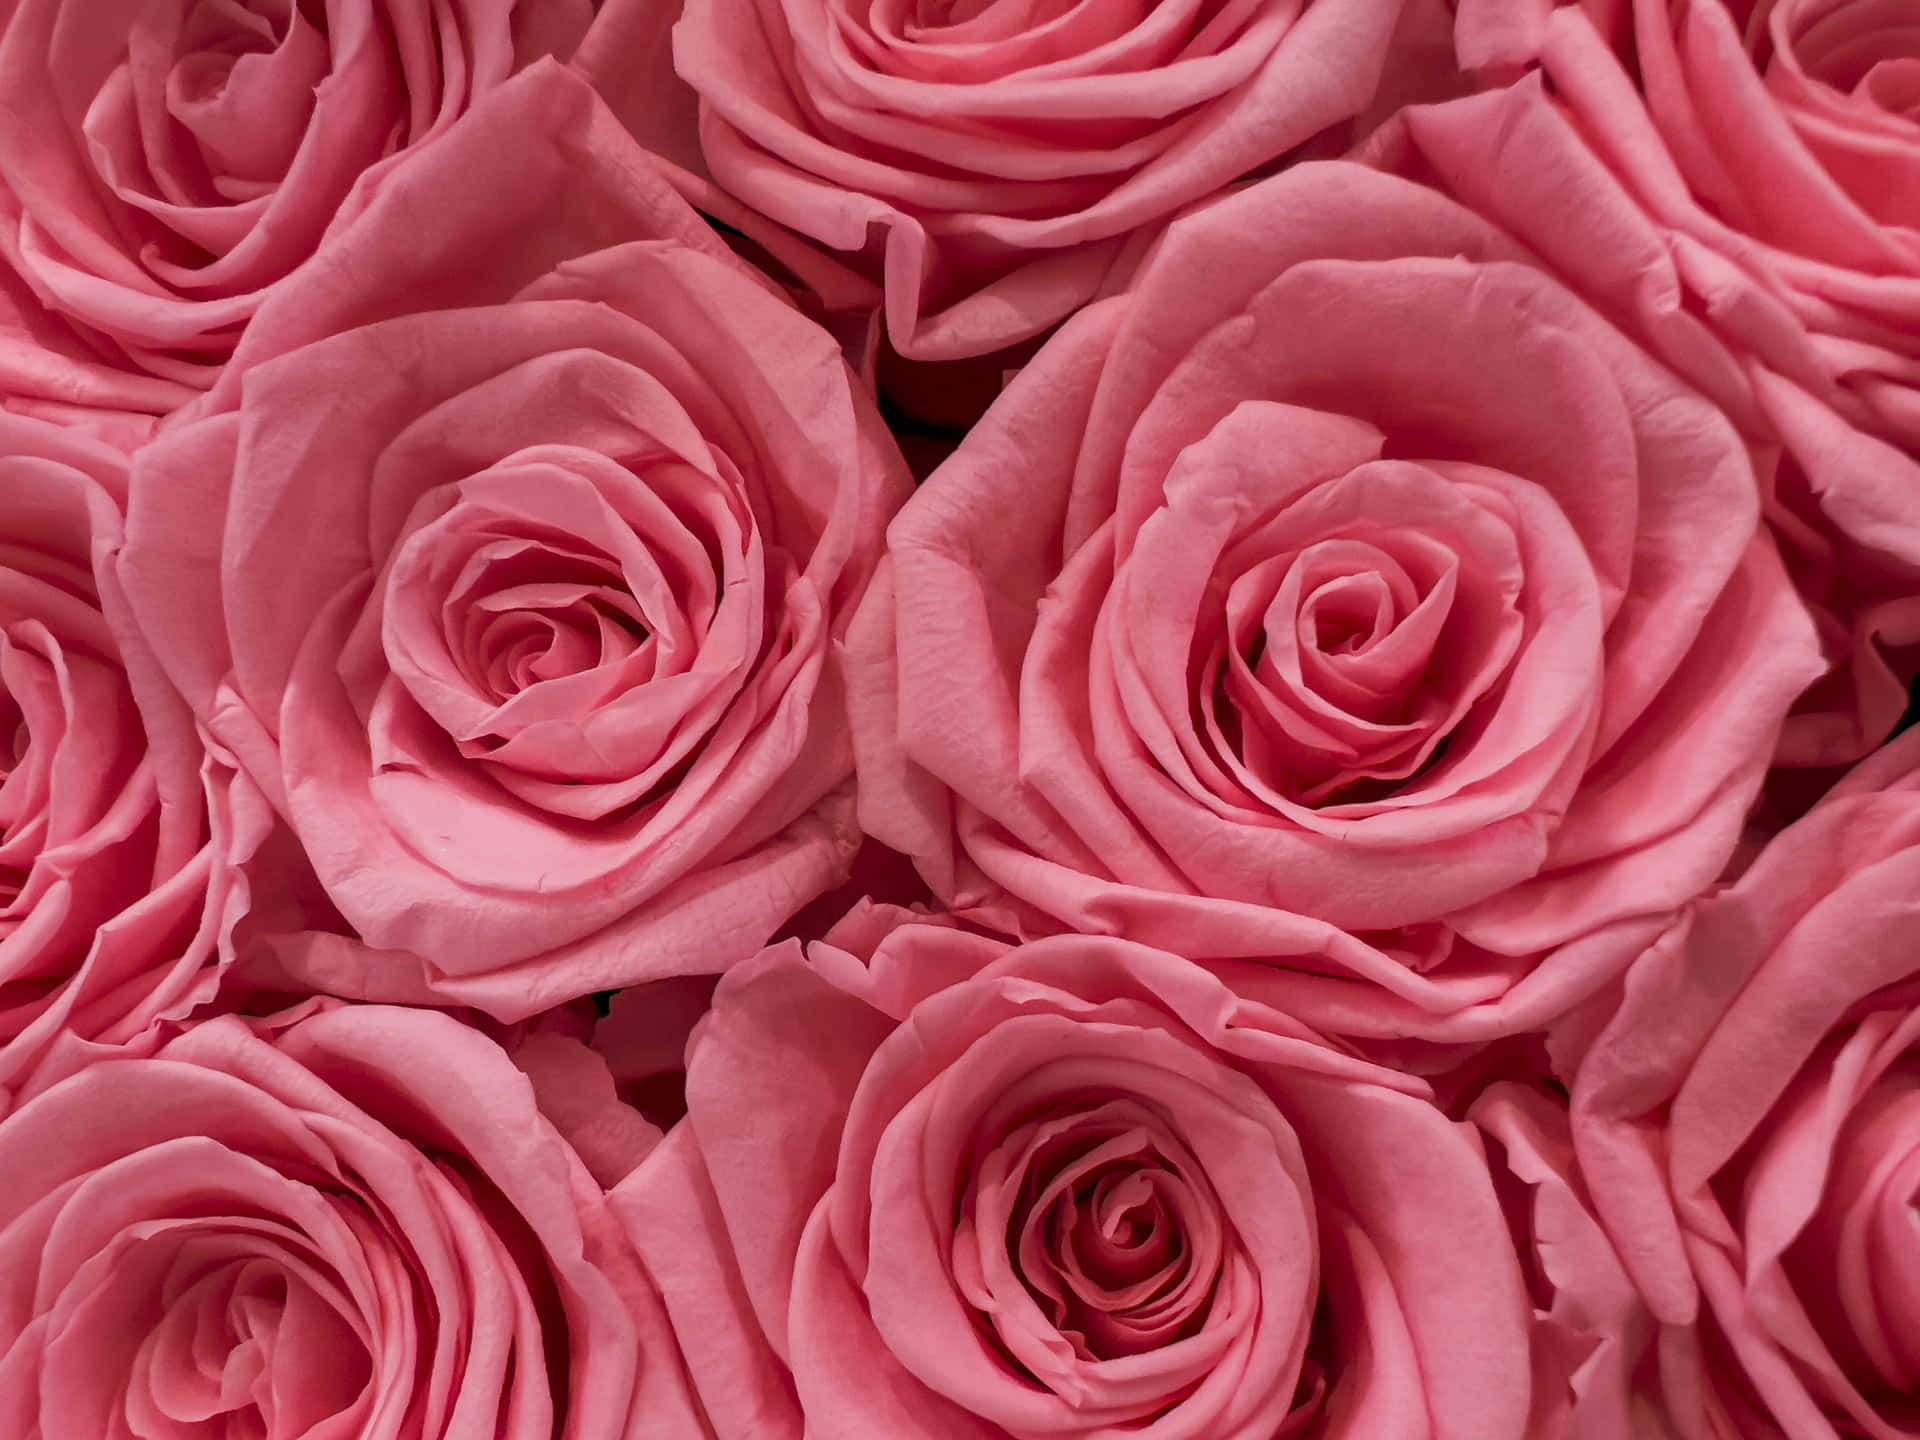 Pink Roses In A Vase